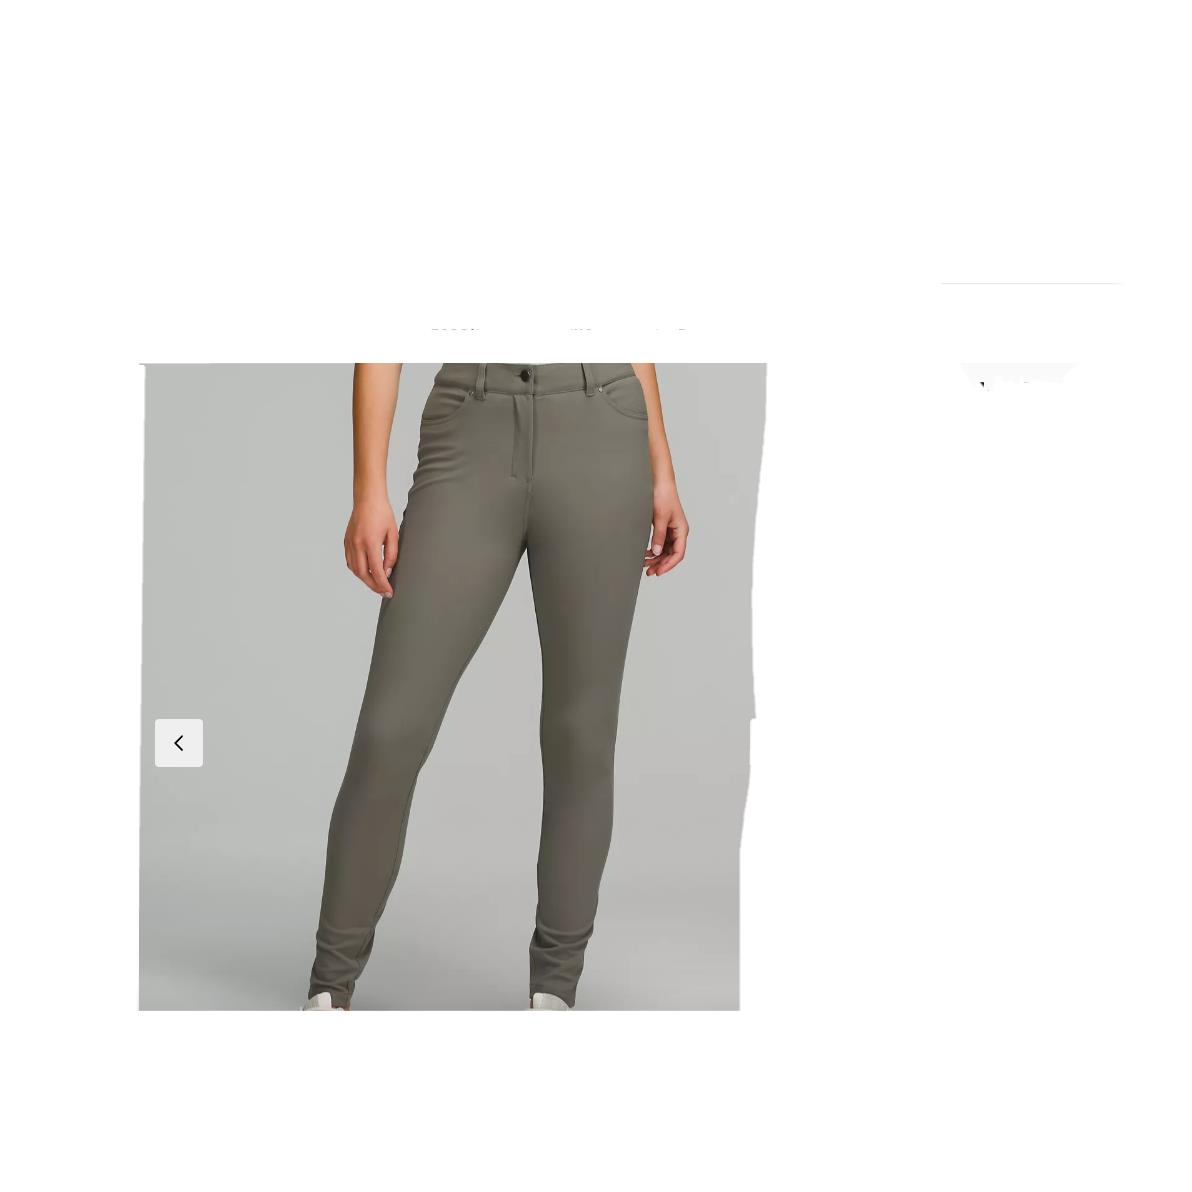 Lululemon City Sleek Slim Fit 5 High Rise Pant Size 29 Grsg Grey Sage Gray